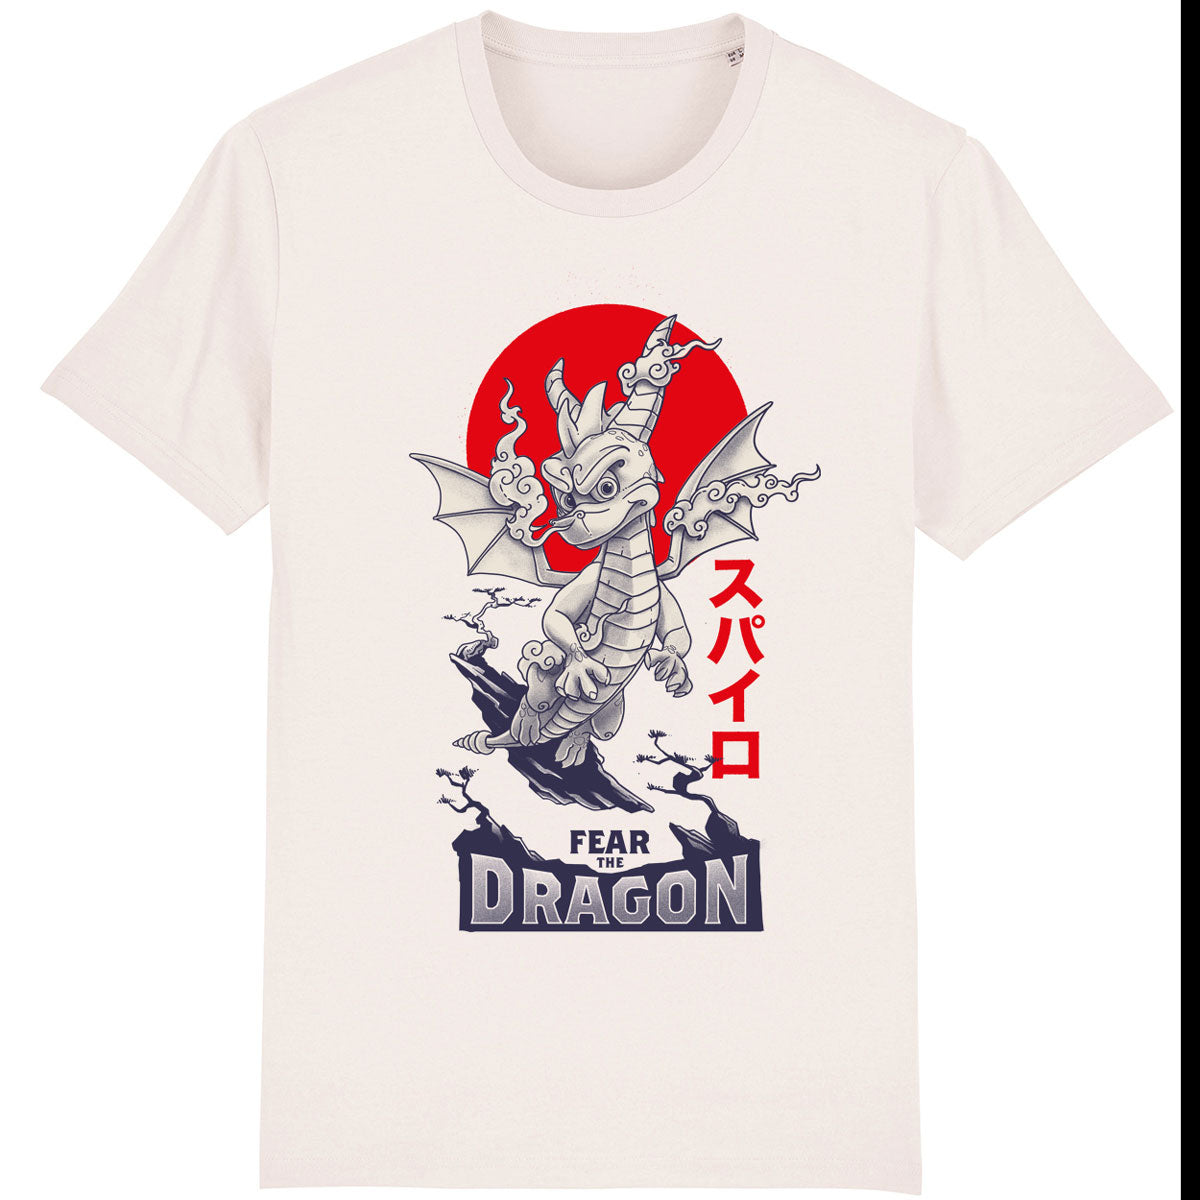 Spyro Fear the Dragon Artist Edition Off White T-Shirt